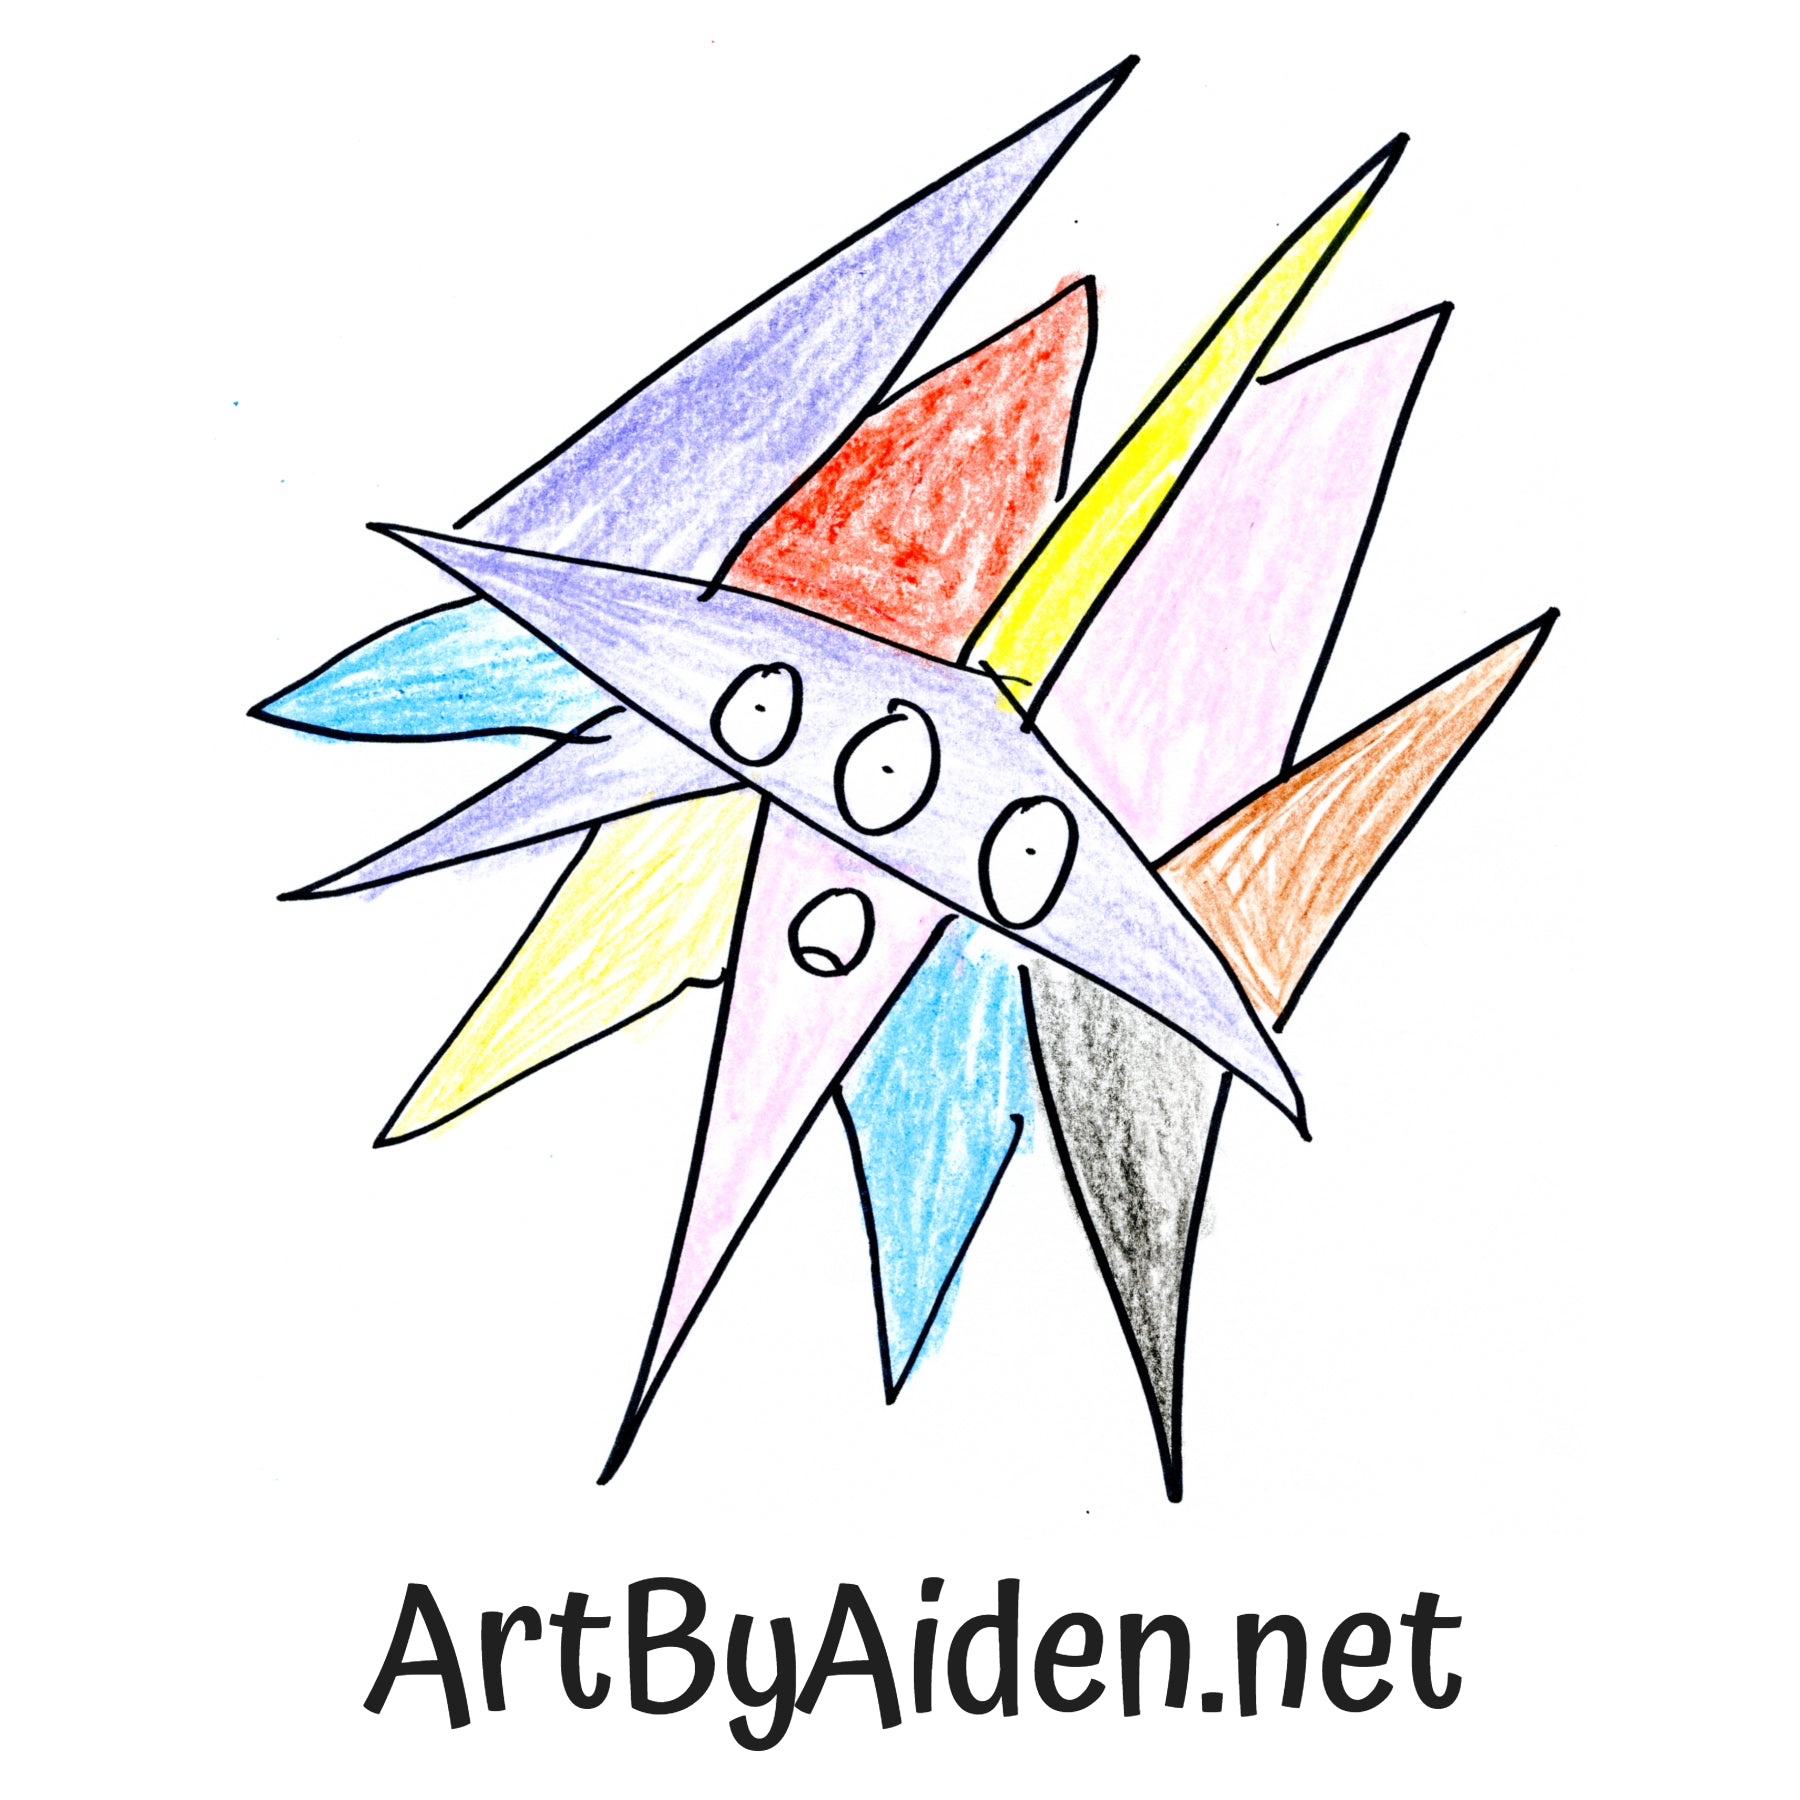 ArtByAiden.net